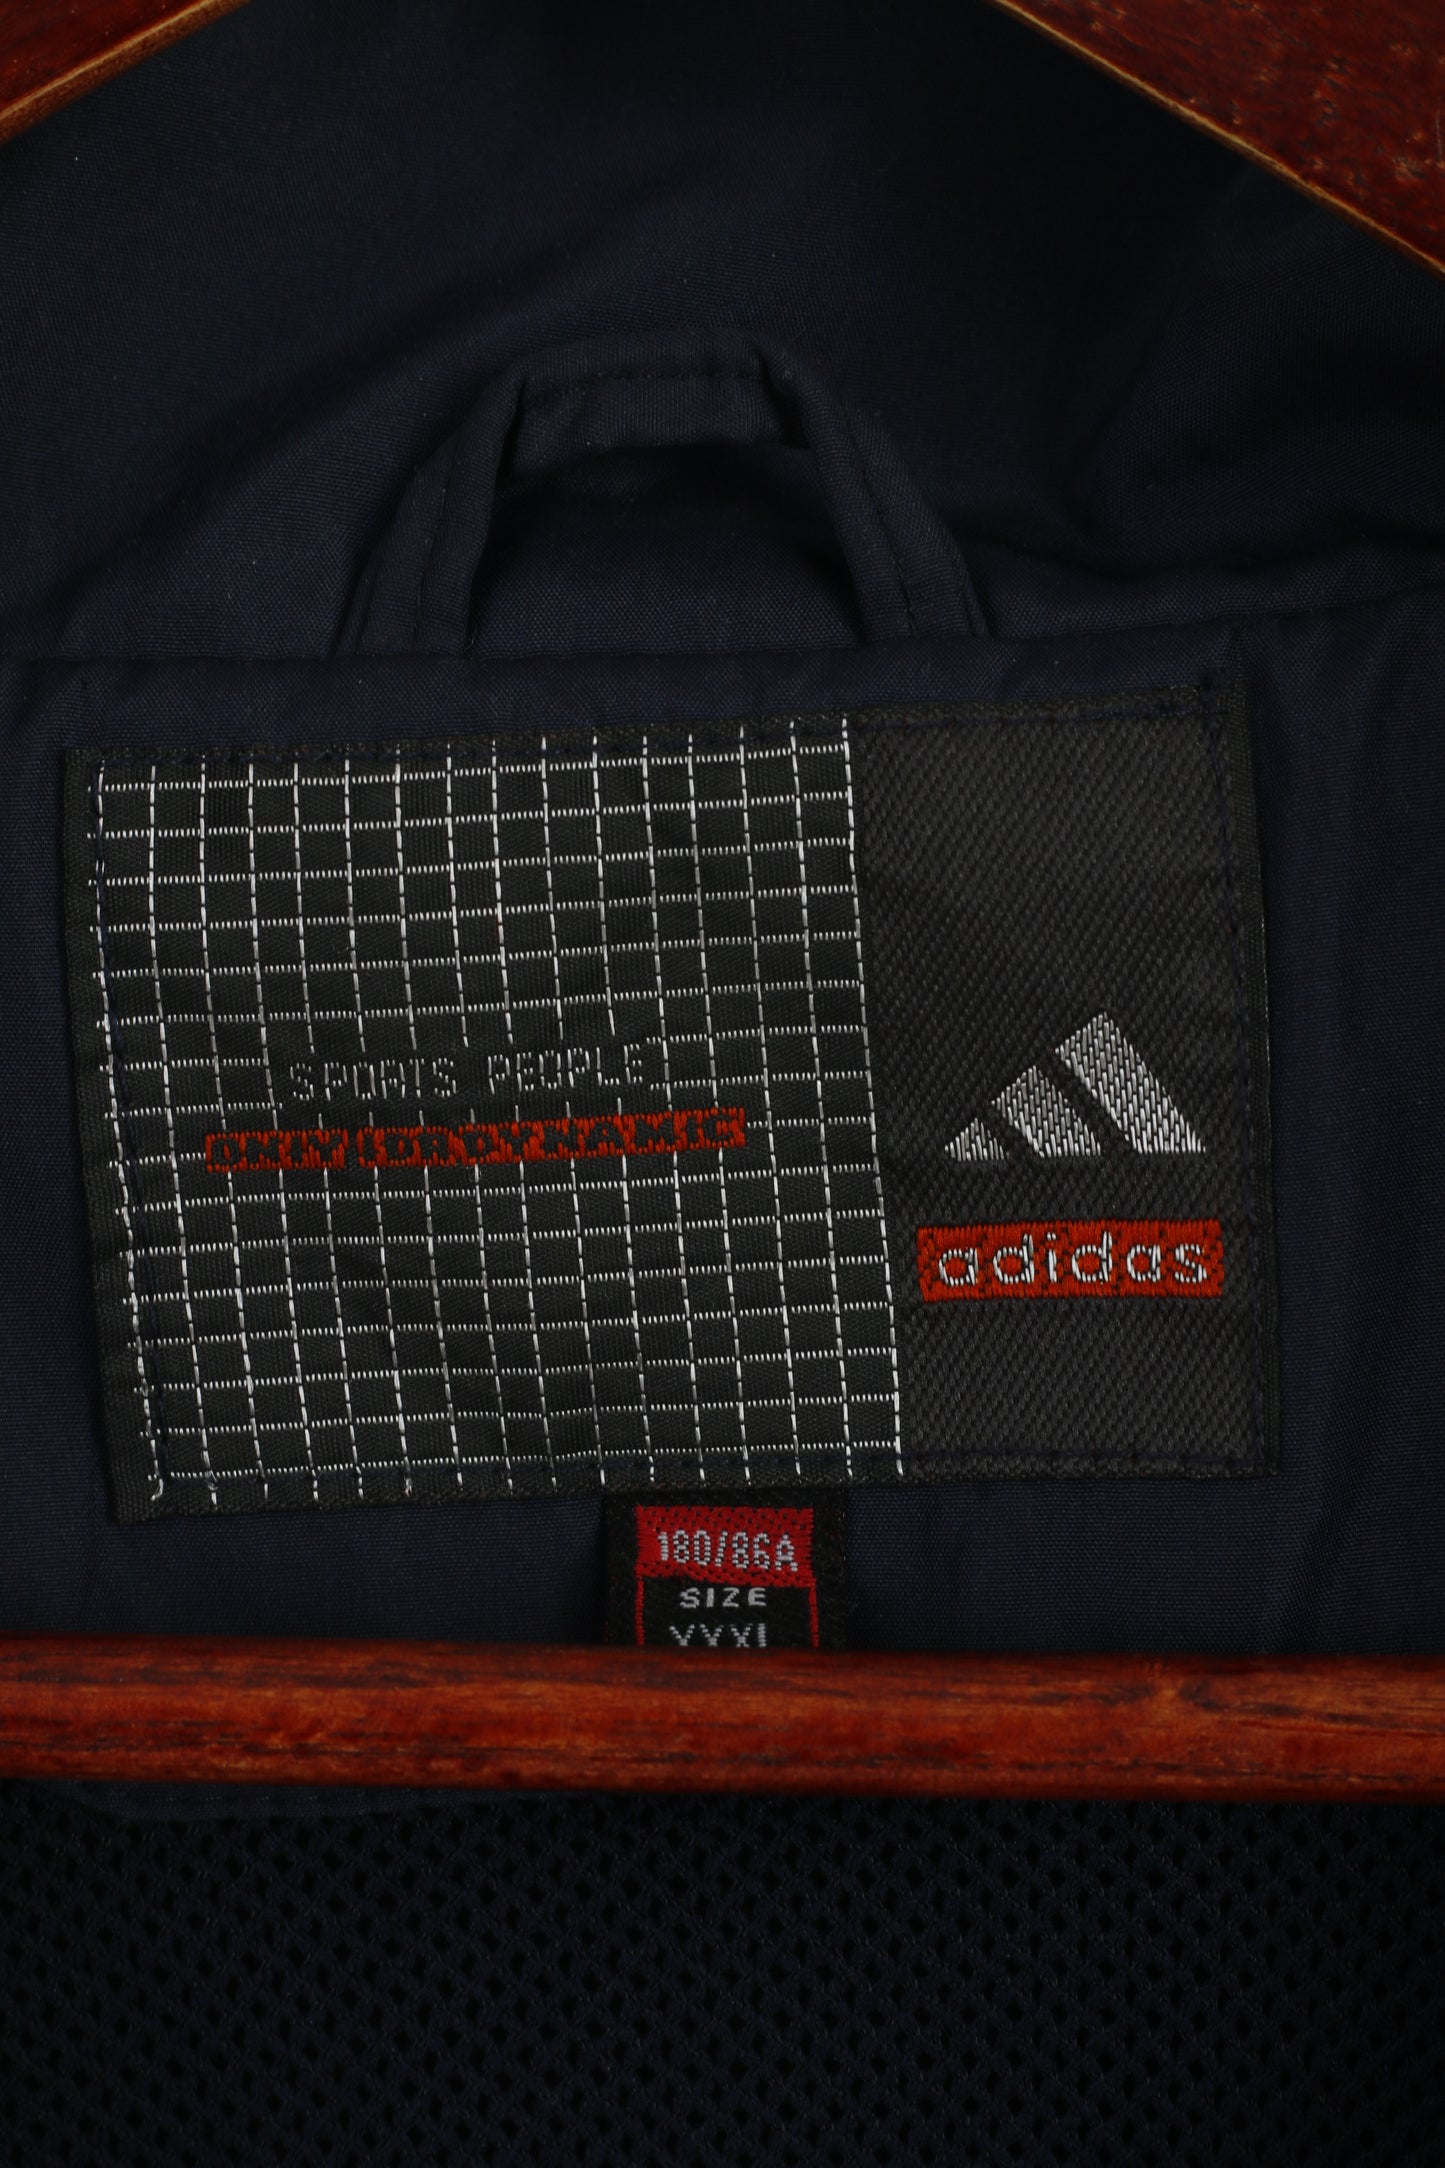 Giacca Adidas da uomo XXXL (XL) blu navy north Down Football foderata in rete leggera